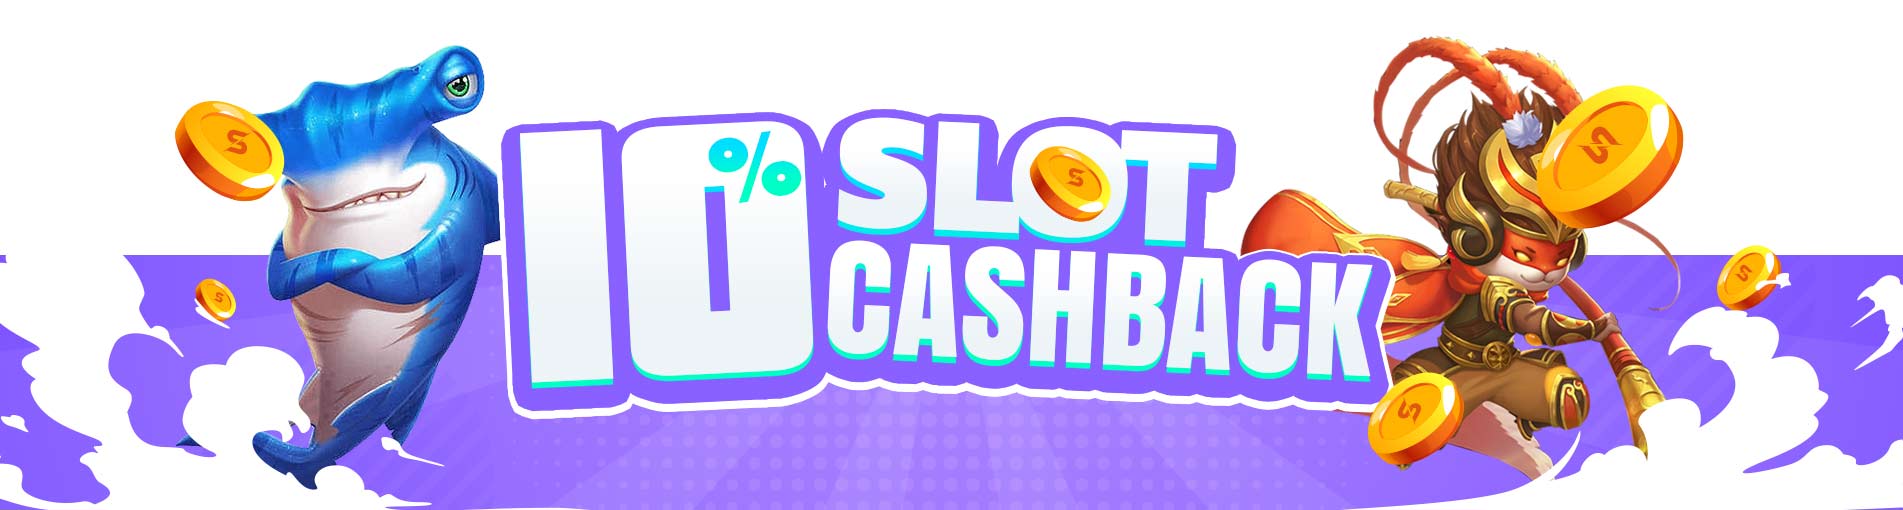 Slot Cashback 10%